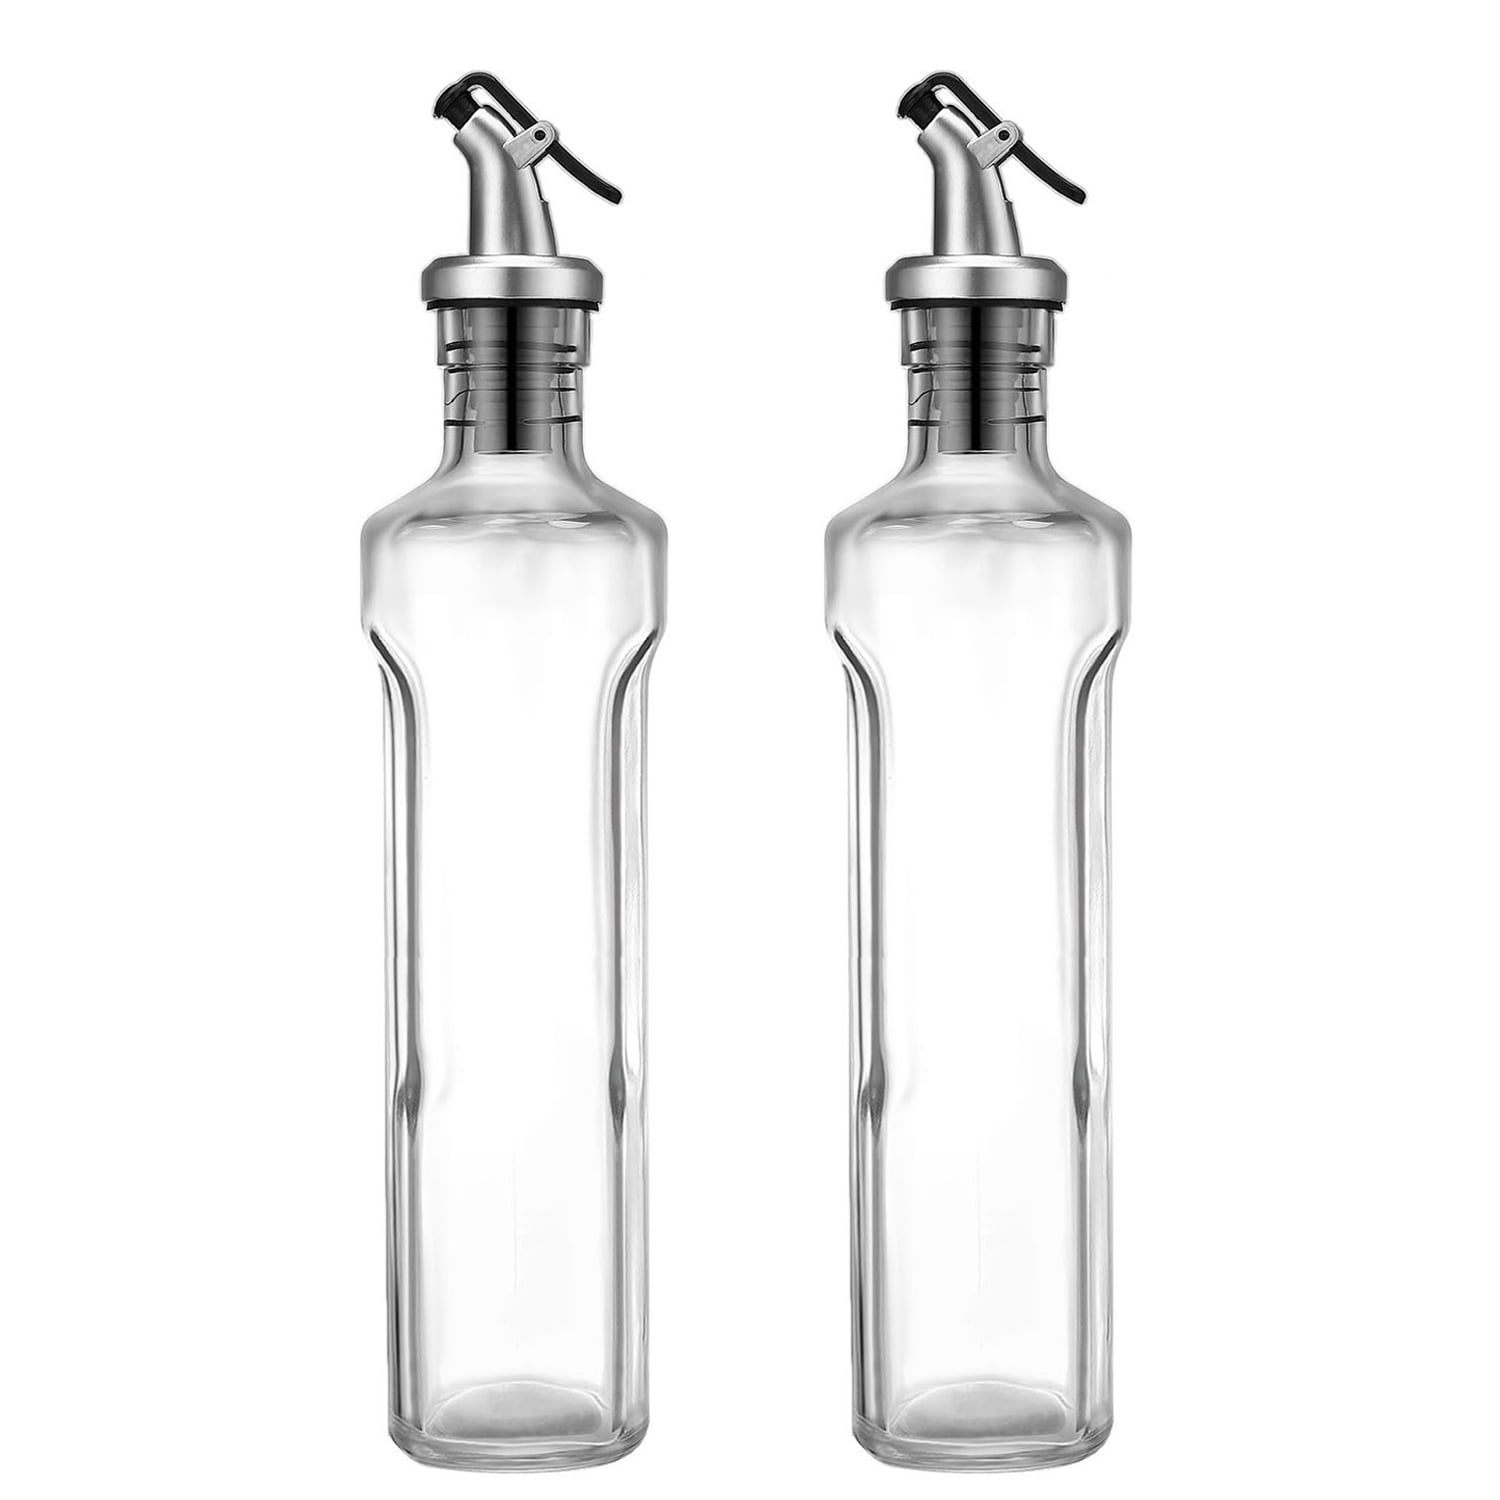 Reuvv Olive Oil Dispenser Bottle Automatic Open No Drip Glass Bottle Kitchen Oil Vinegar Measuring Spout Bottle Lead-Free Glass Oil Dispenser 280ML 